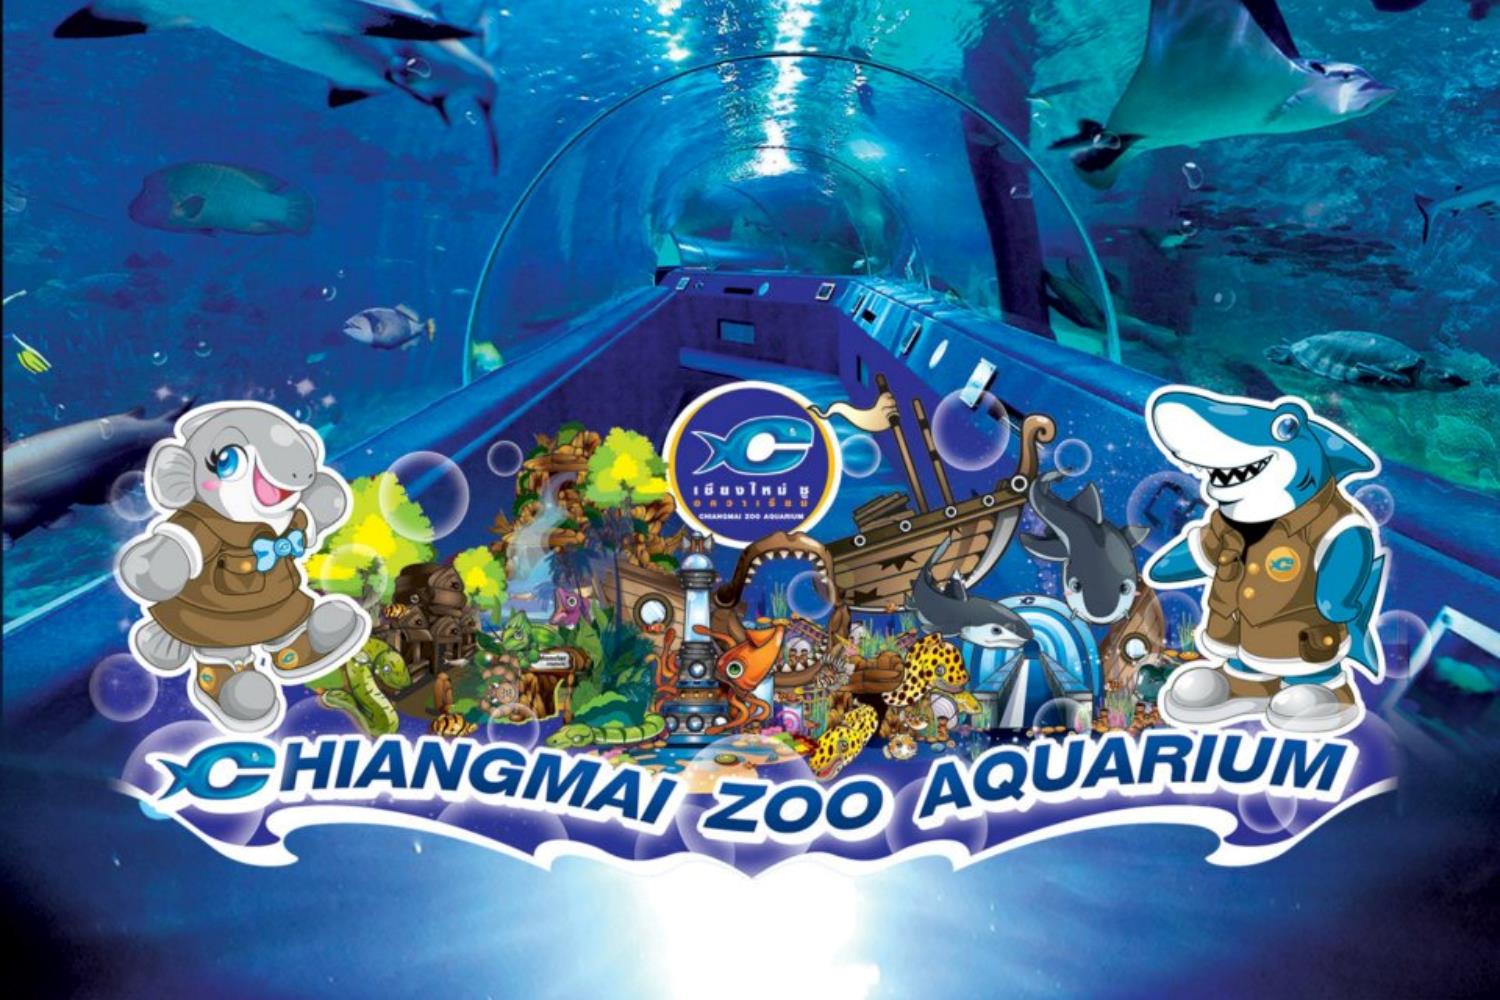 Chiangmai Zoo Aquarium ศูนย์แสดงพันธุ์สัตว์น้ำ